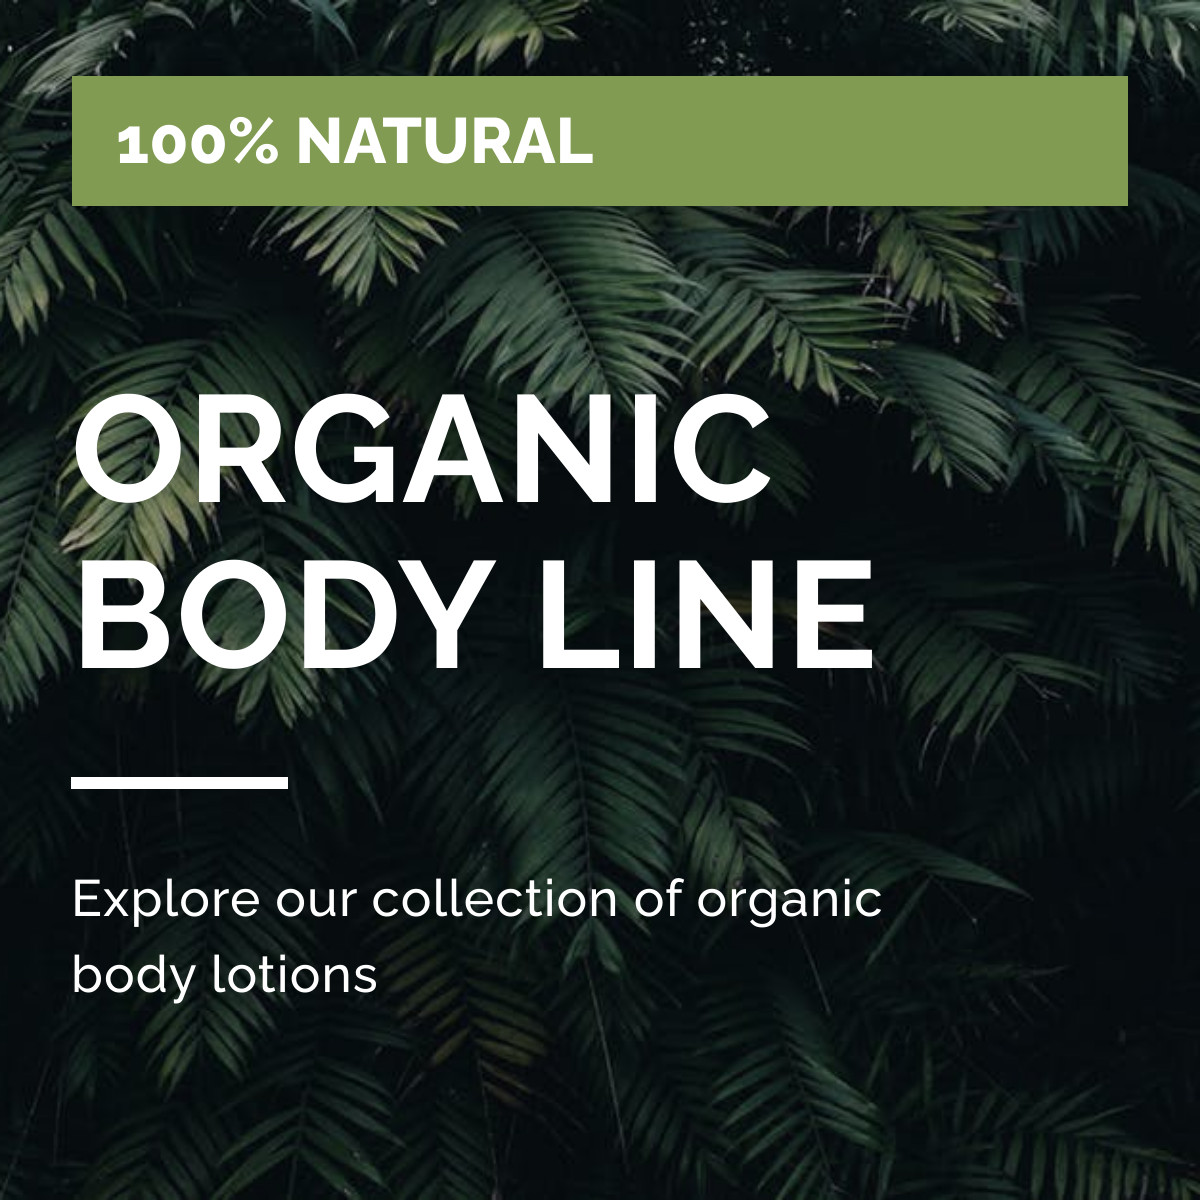 Green Organic Body Line Inline Rectangle 300x250